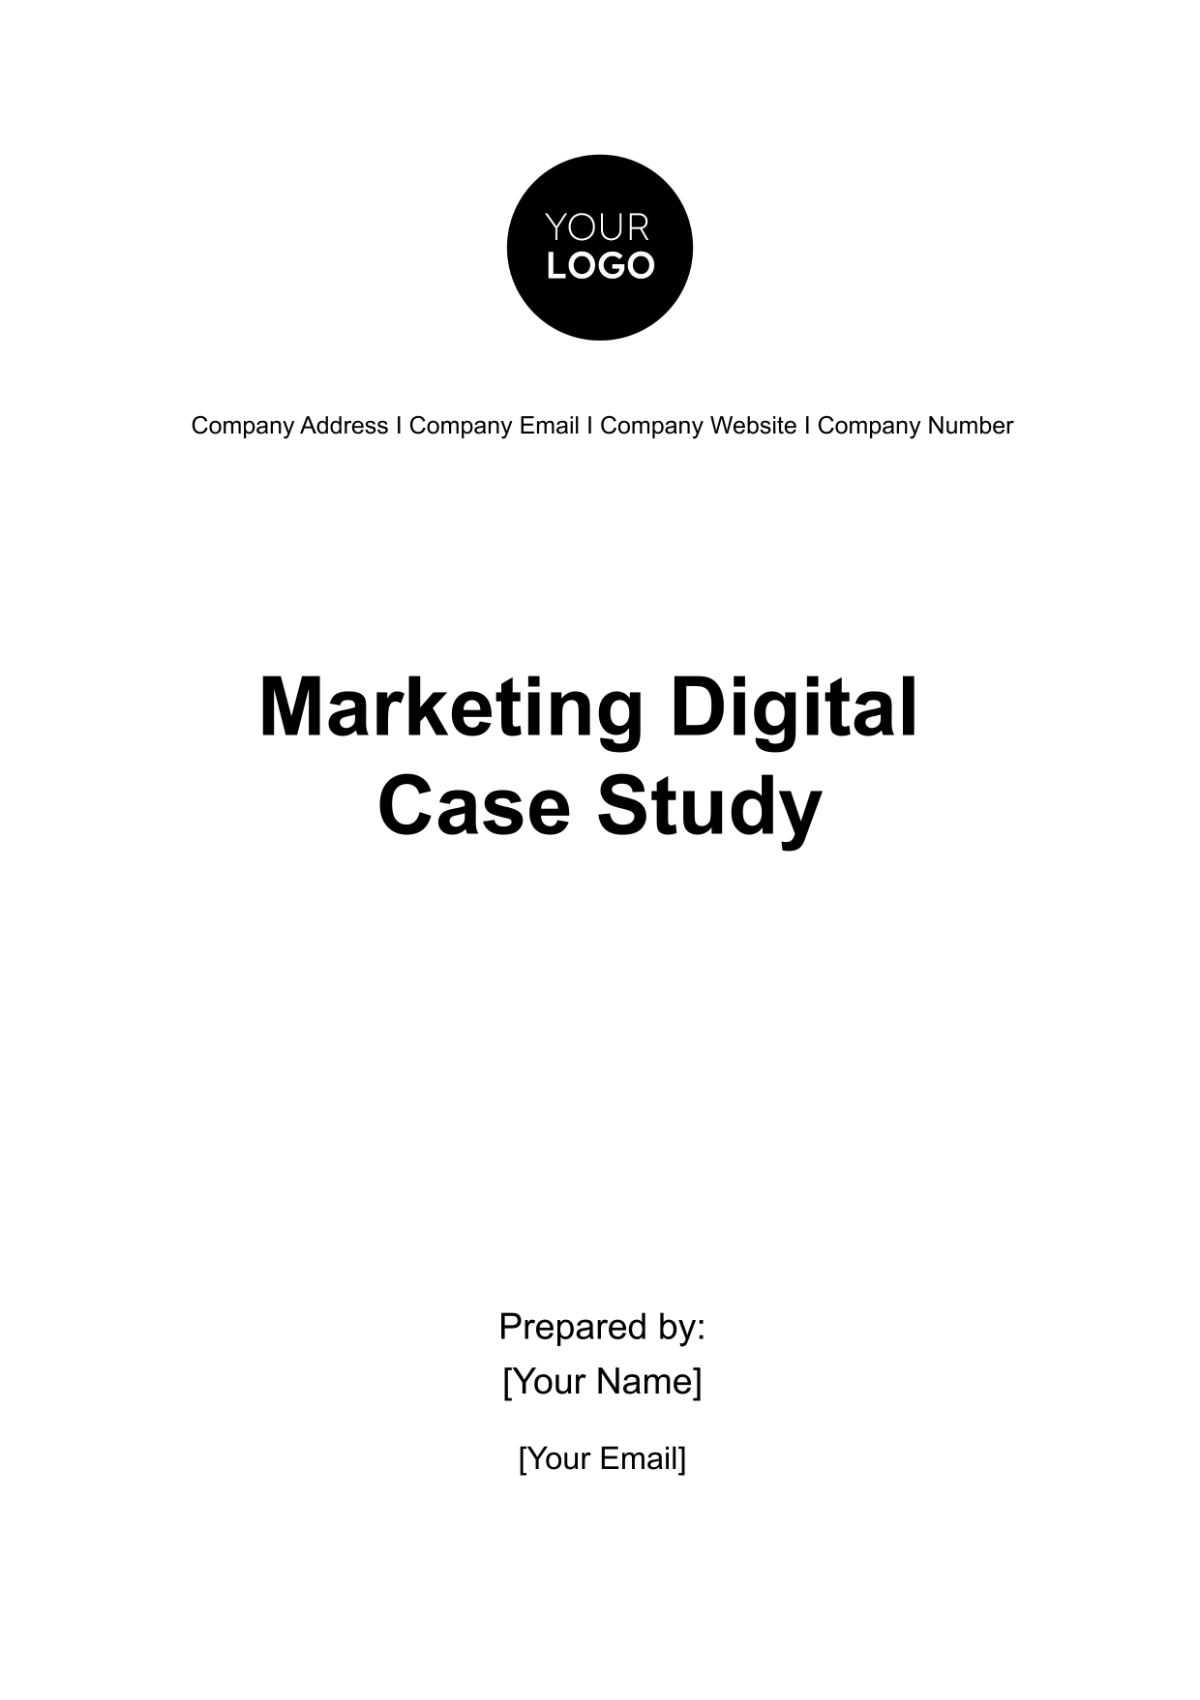 Marketing Digital Case Study Template